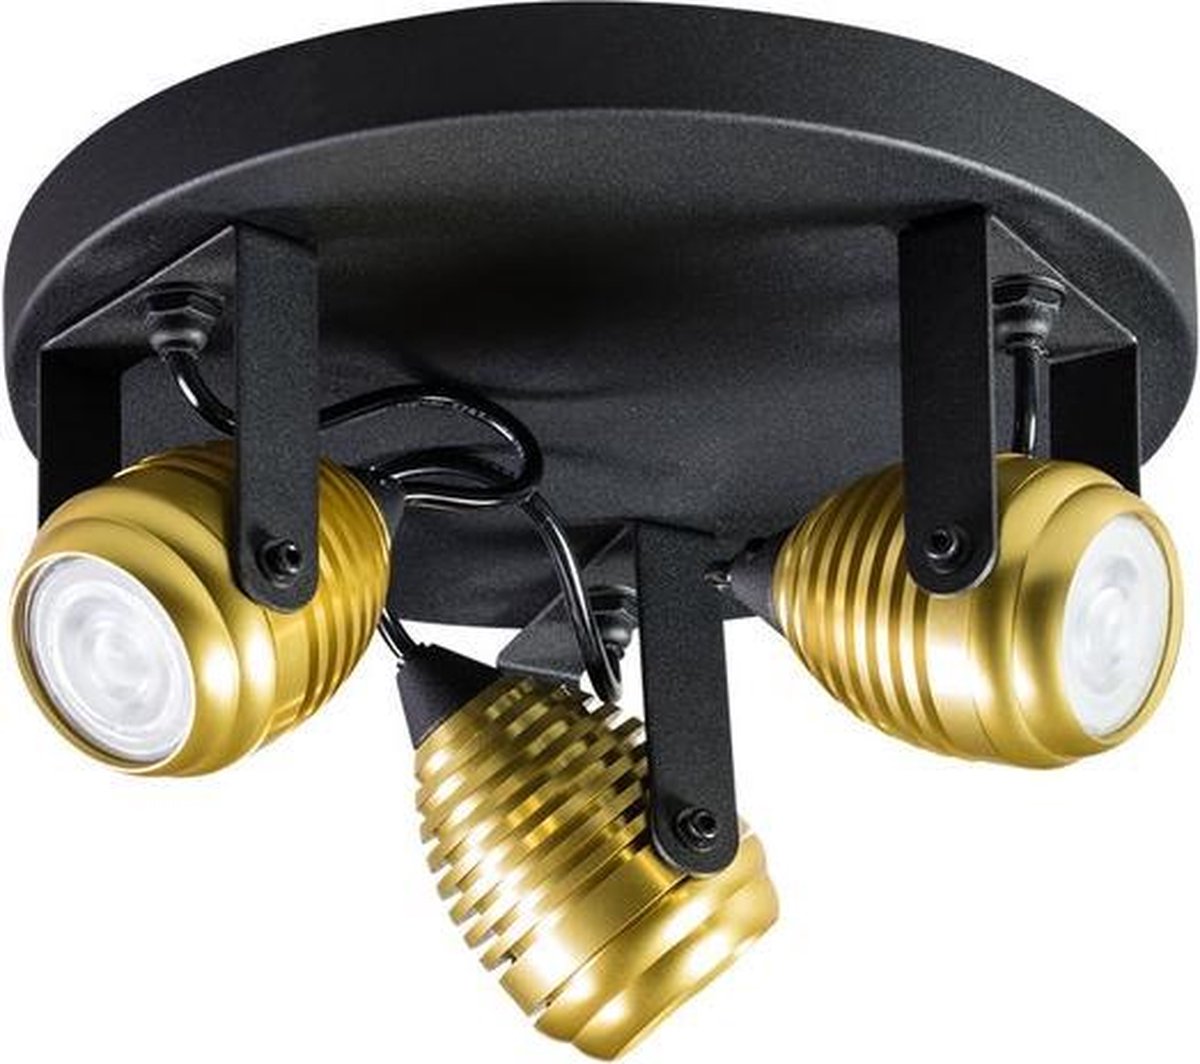 Spot Wasp met drie kapjes - Goud - Zwart - Plafondlamp - Gouden lamp - Goud plafondlamp - Industriële lamp